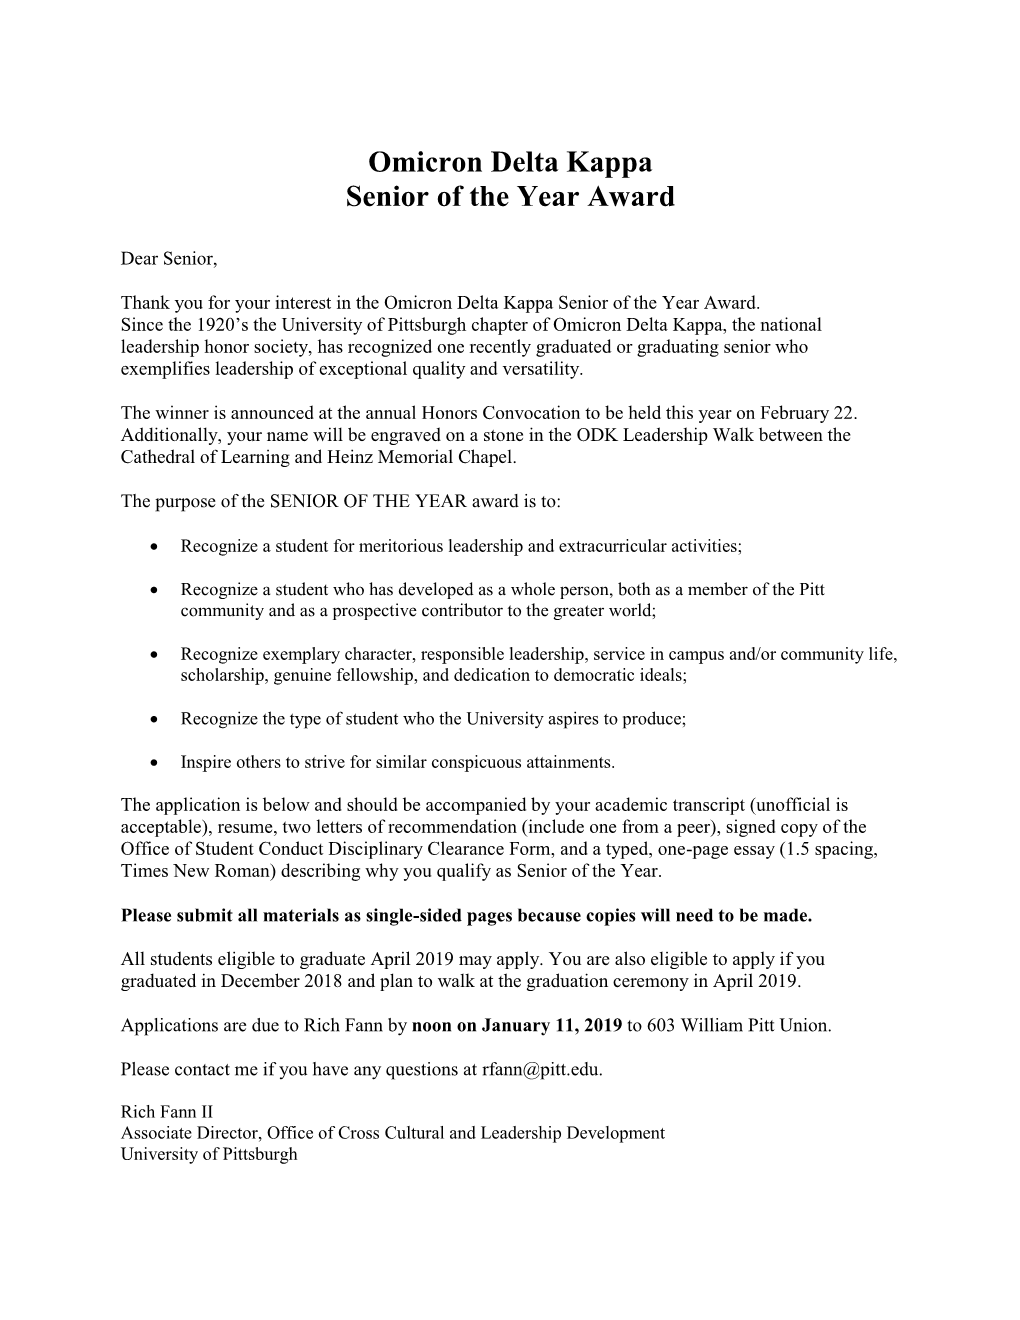 Omicron Delta Kappa Senior of the Year Award